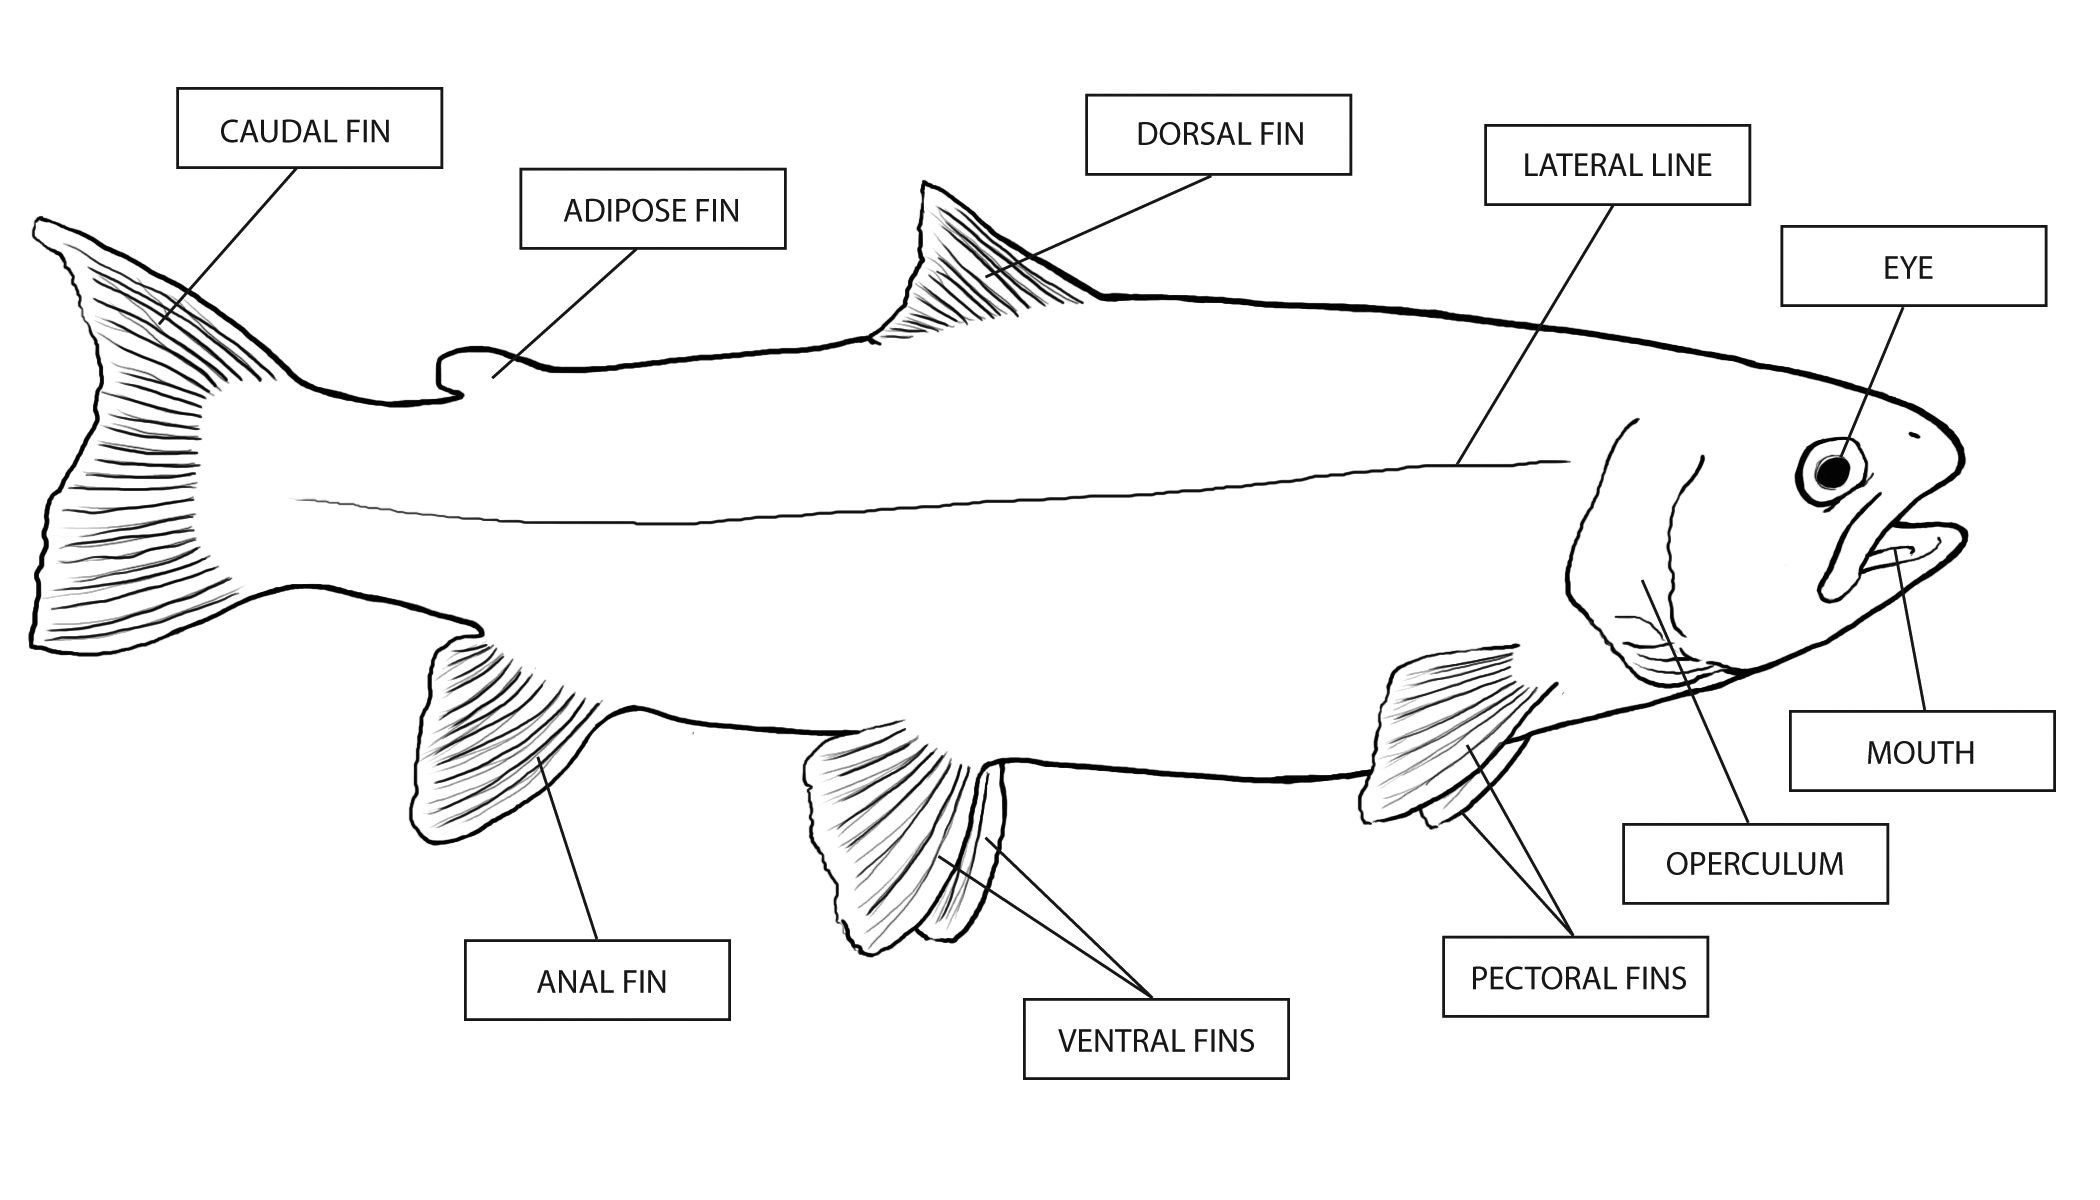 Ocean Animals Worksheets